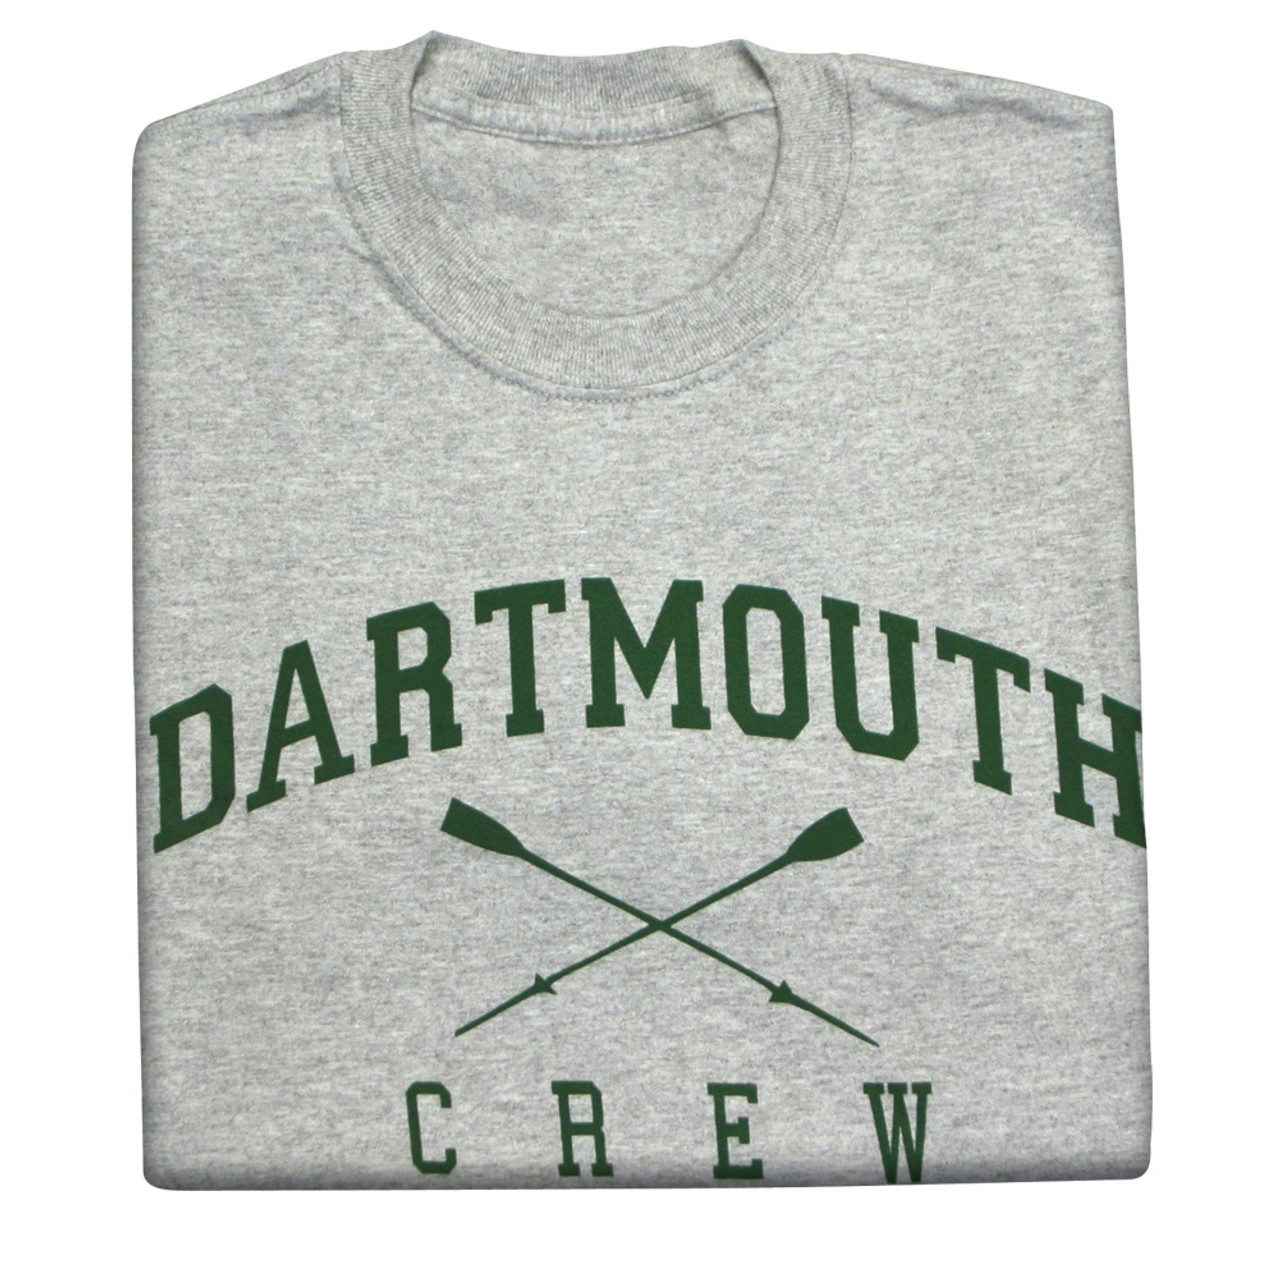 dartmouth college sweatshirt